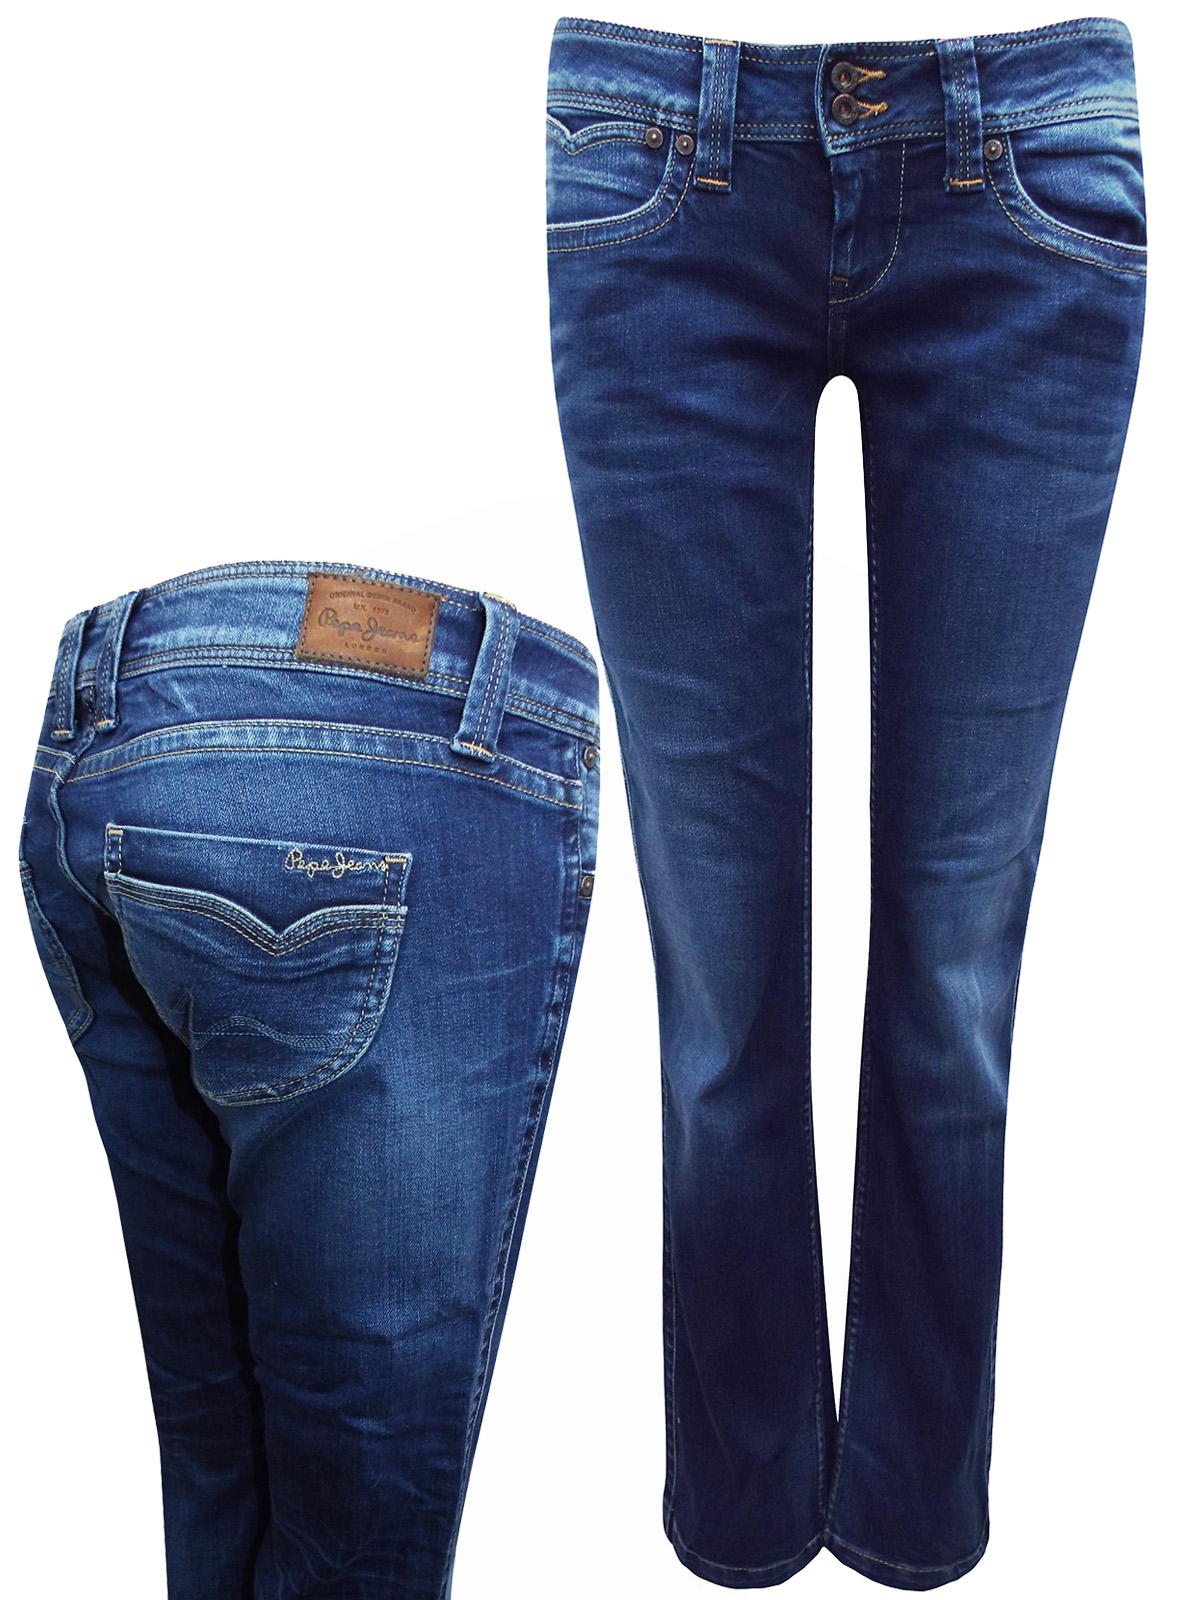 Jeans - - Pepe Jeans DARK-DENIM Low Rise Regular Fit Straight Leg Denim Jeans - Waist Size